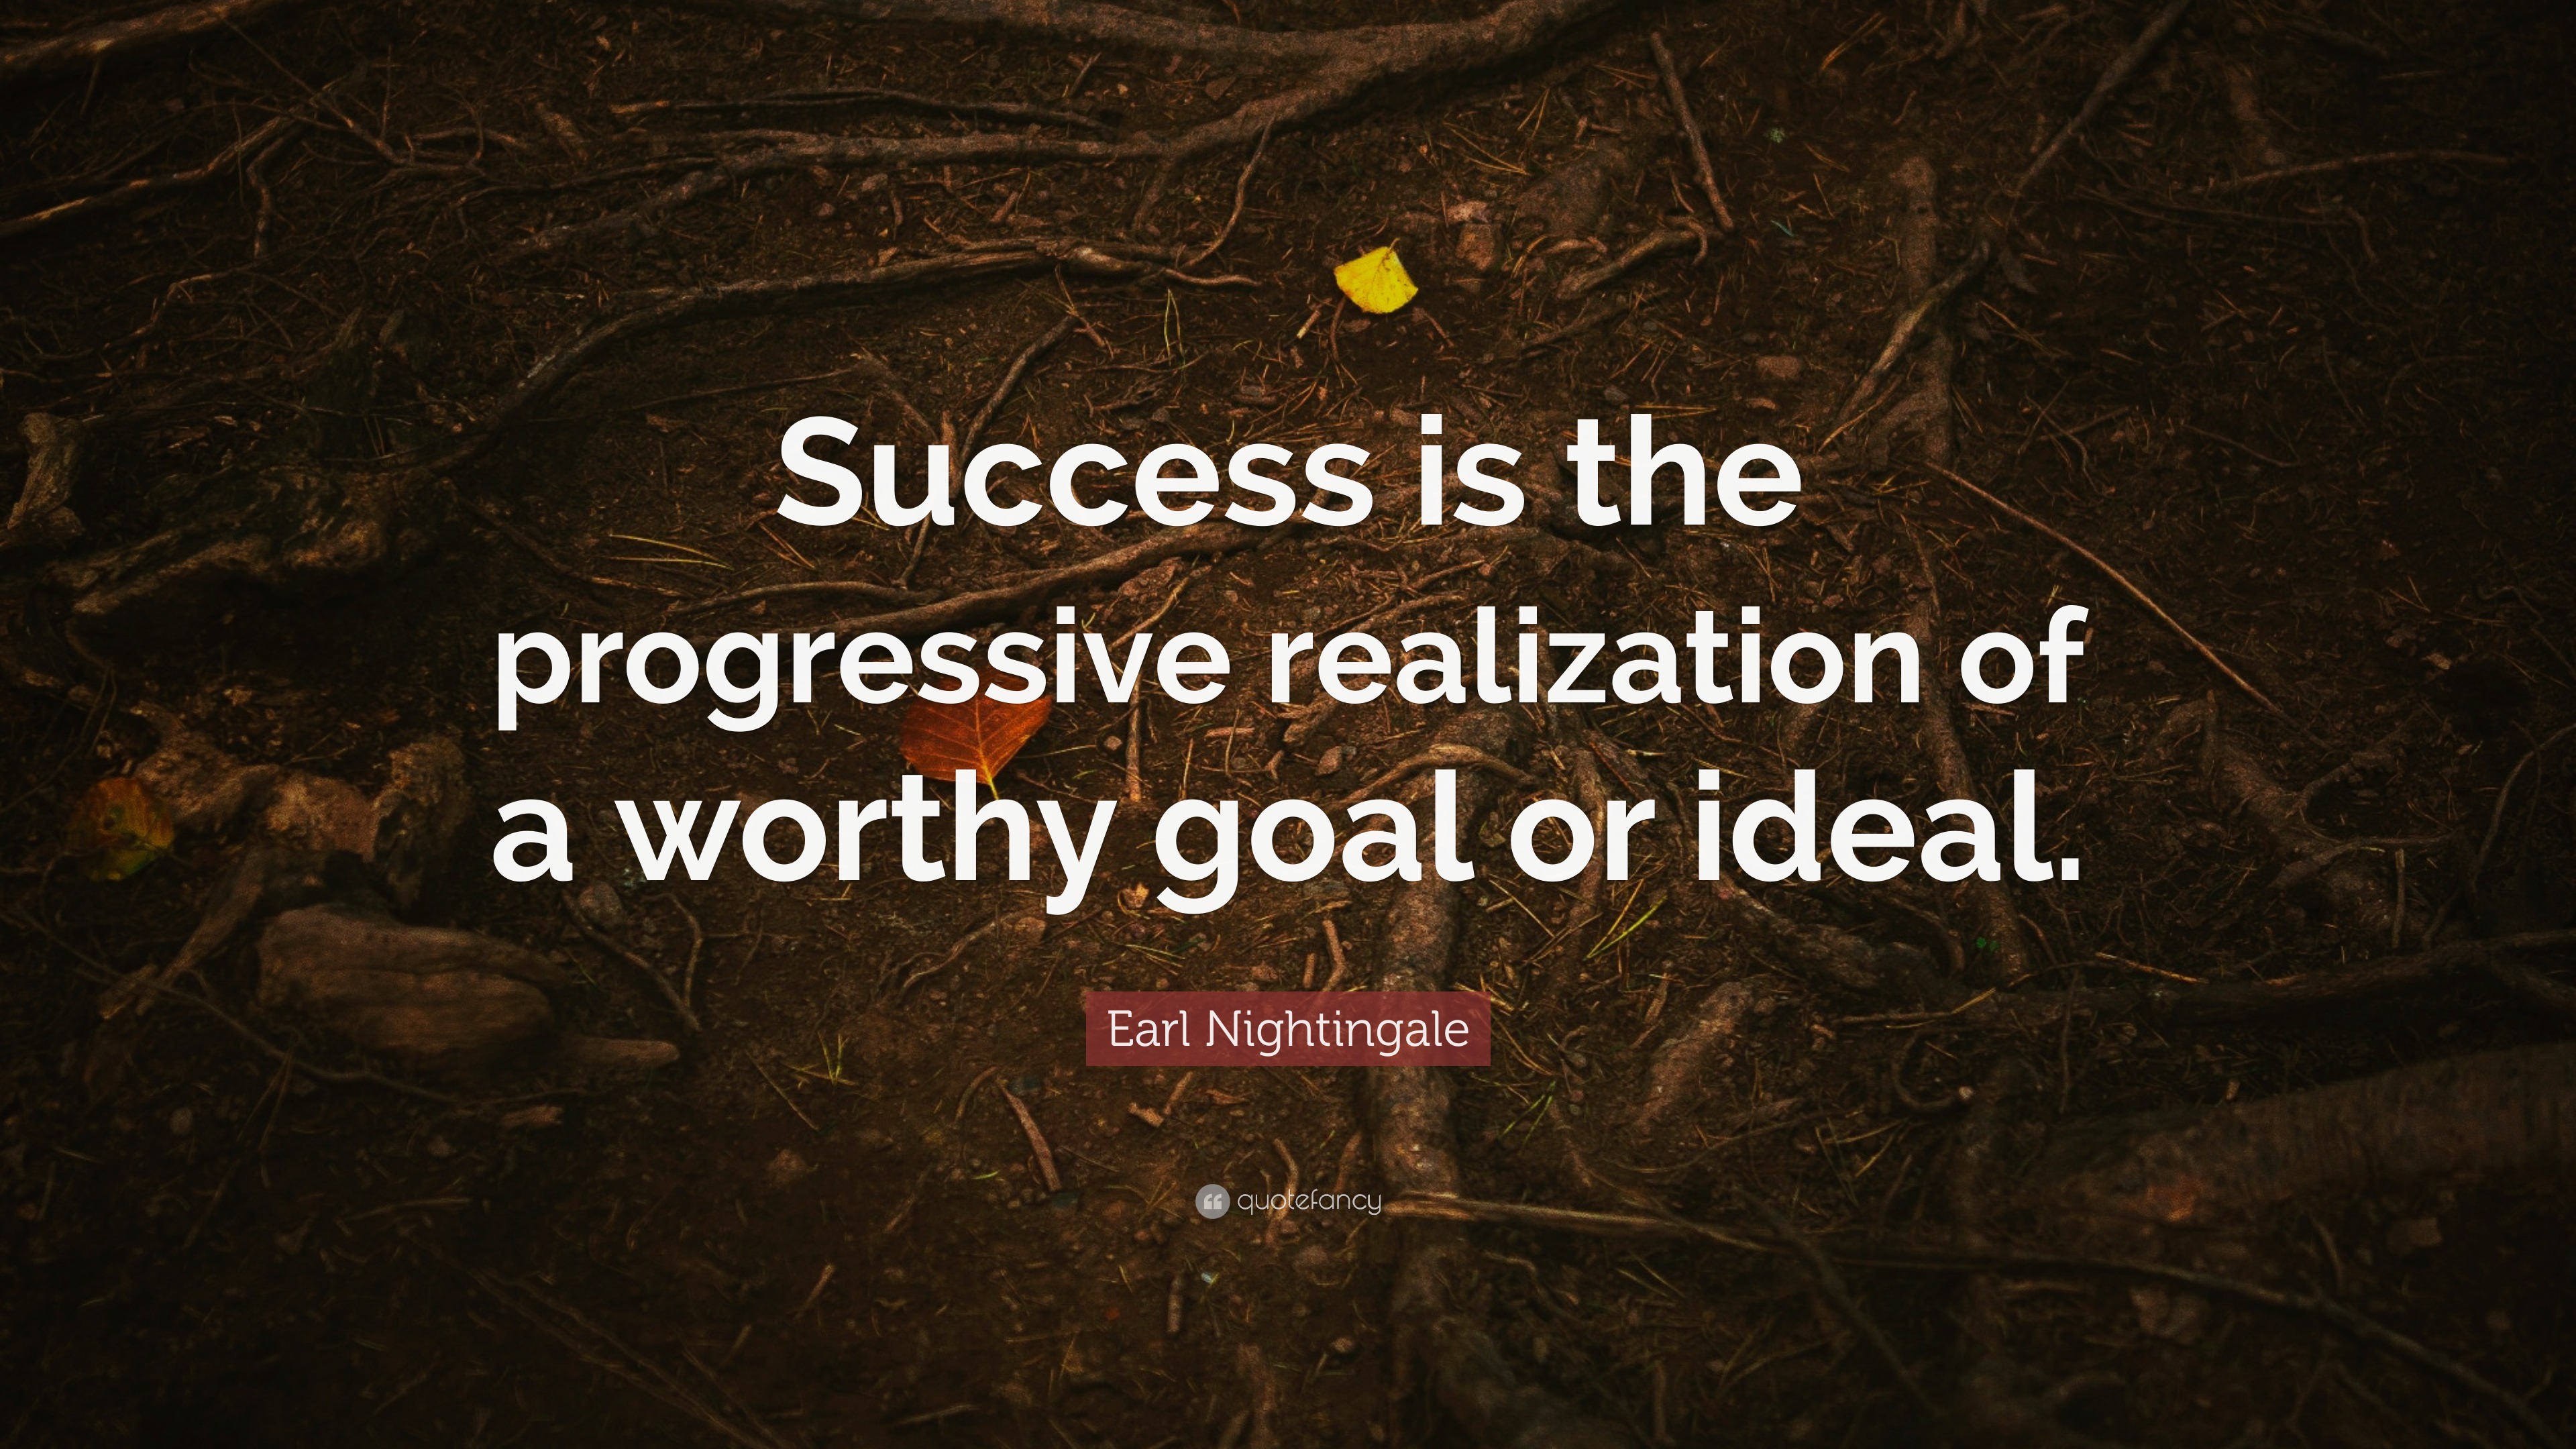 Earl Nightingale Quote “Success is the progressive